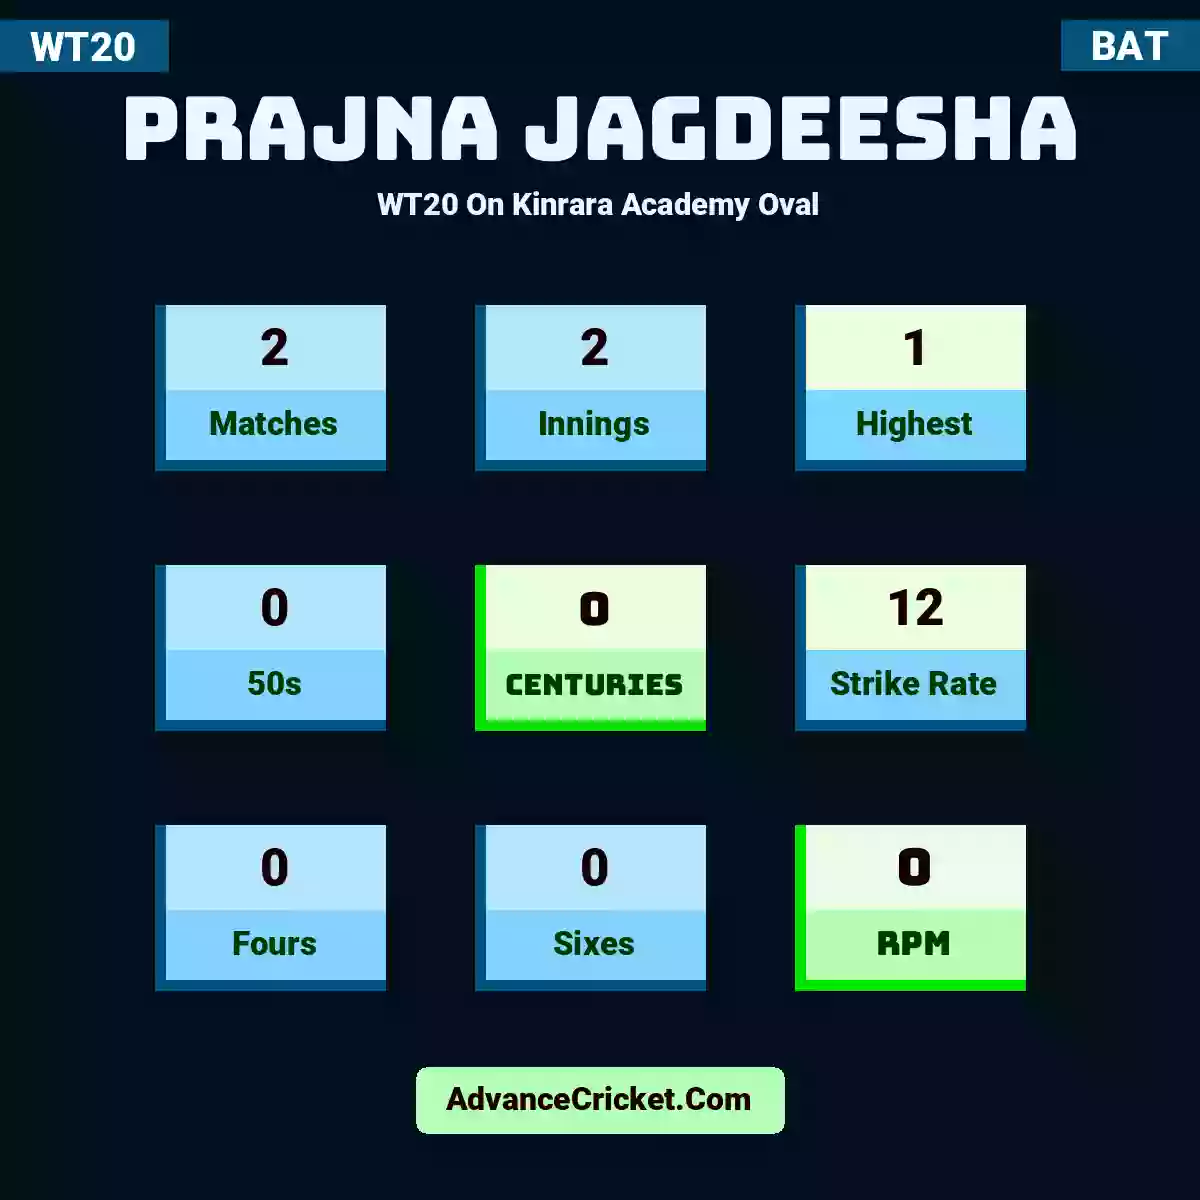 Prajna Jagdeesha WT20  On Kinrara Academy Oval, Prajna Jagdeesha played 2 matches, scored 1 runs as highest, 0 half-centuries, and 0 centuries, with a strike rate of 12. P.Jagdeesha hit 0 fours and 0 sixes, with an RPM of 0.